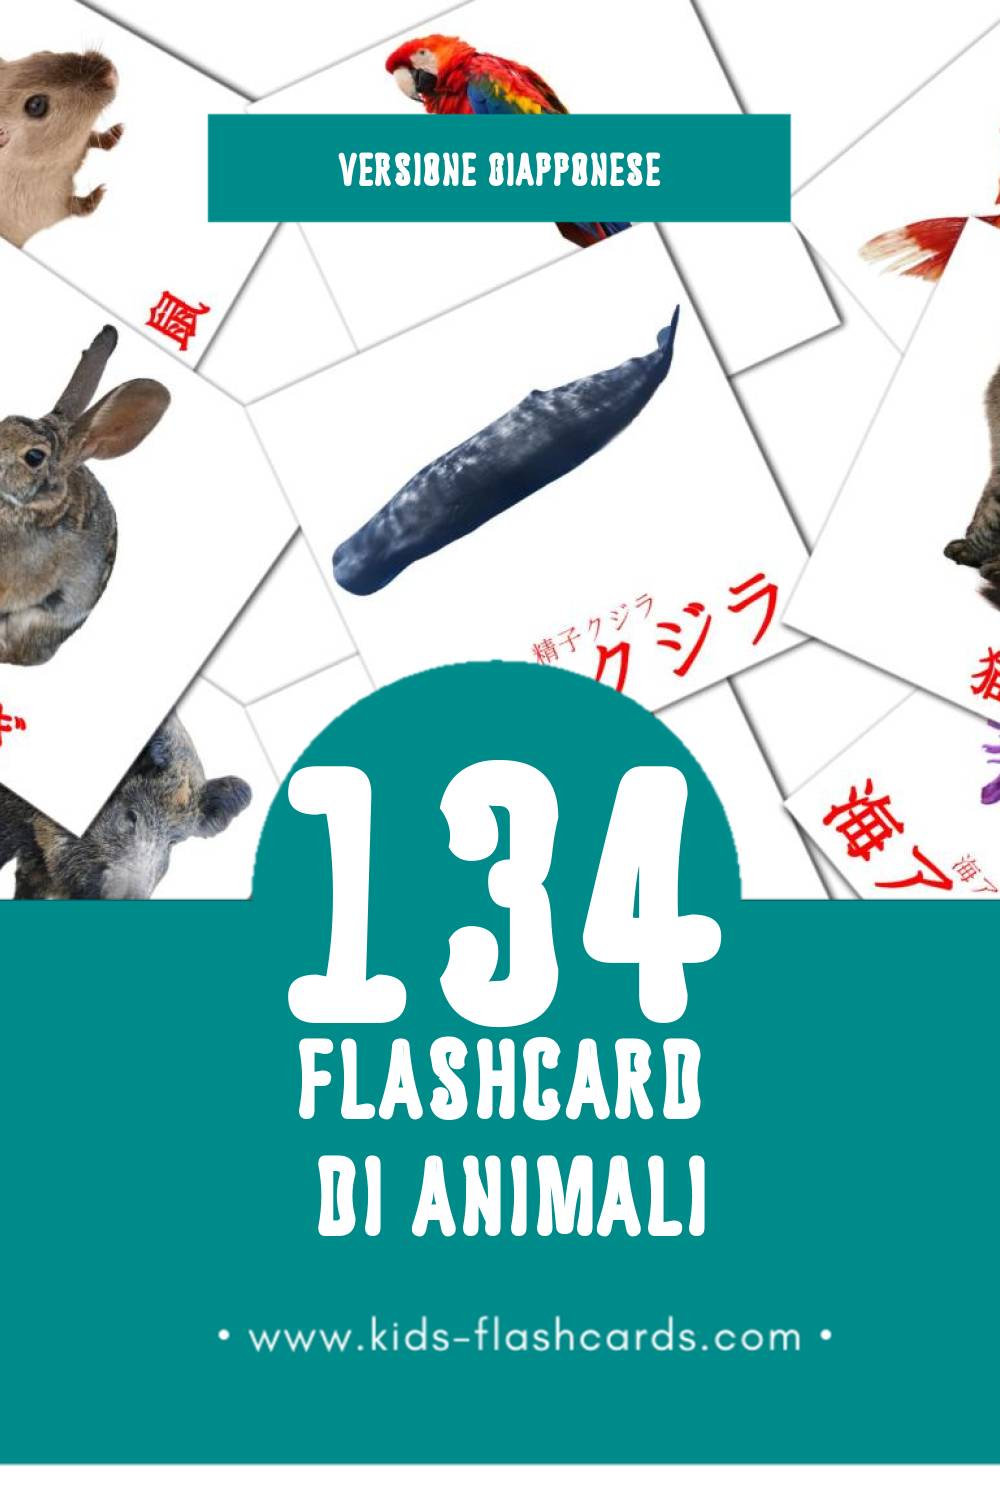 Schede visive sugli 動物 - どうぶつ per bambini (134 schede in Giapponese)